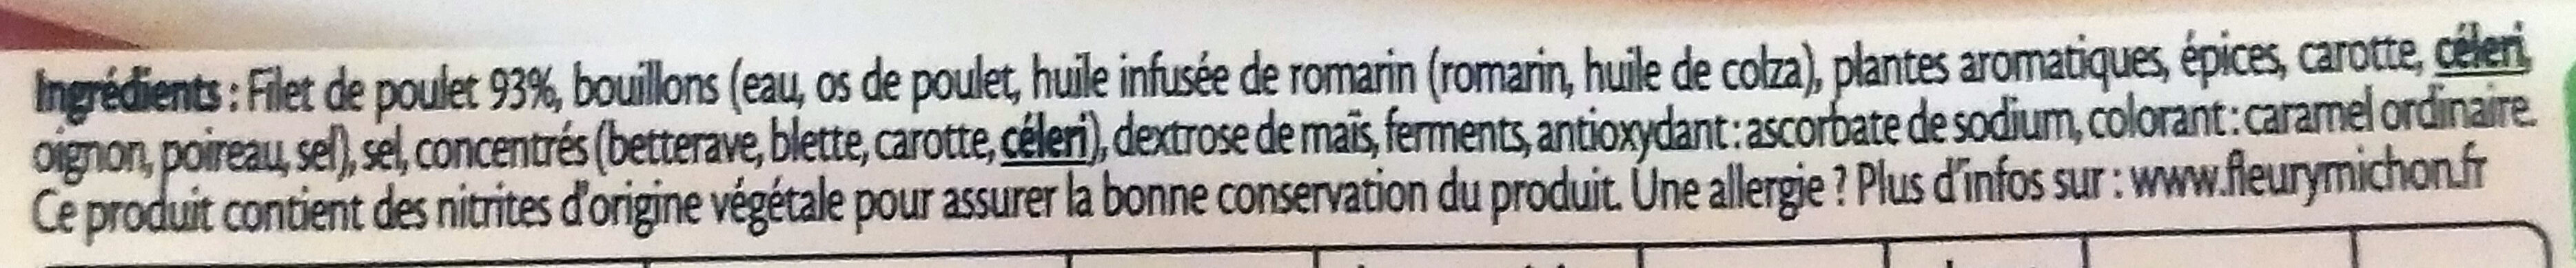 Filet de Poulet - Fumé - Ingrediënten - fr